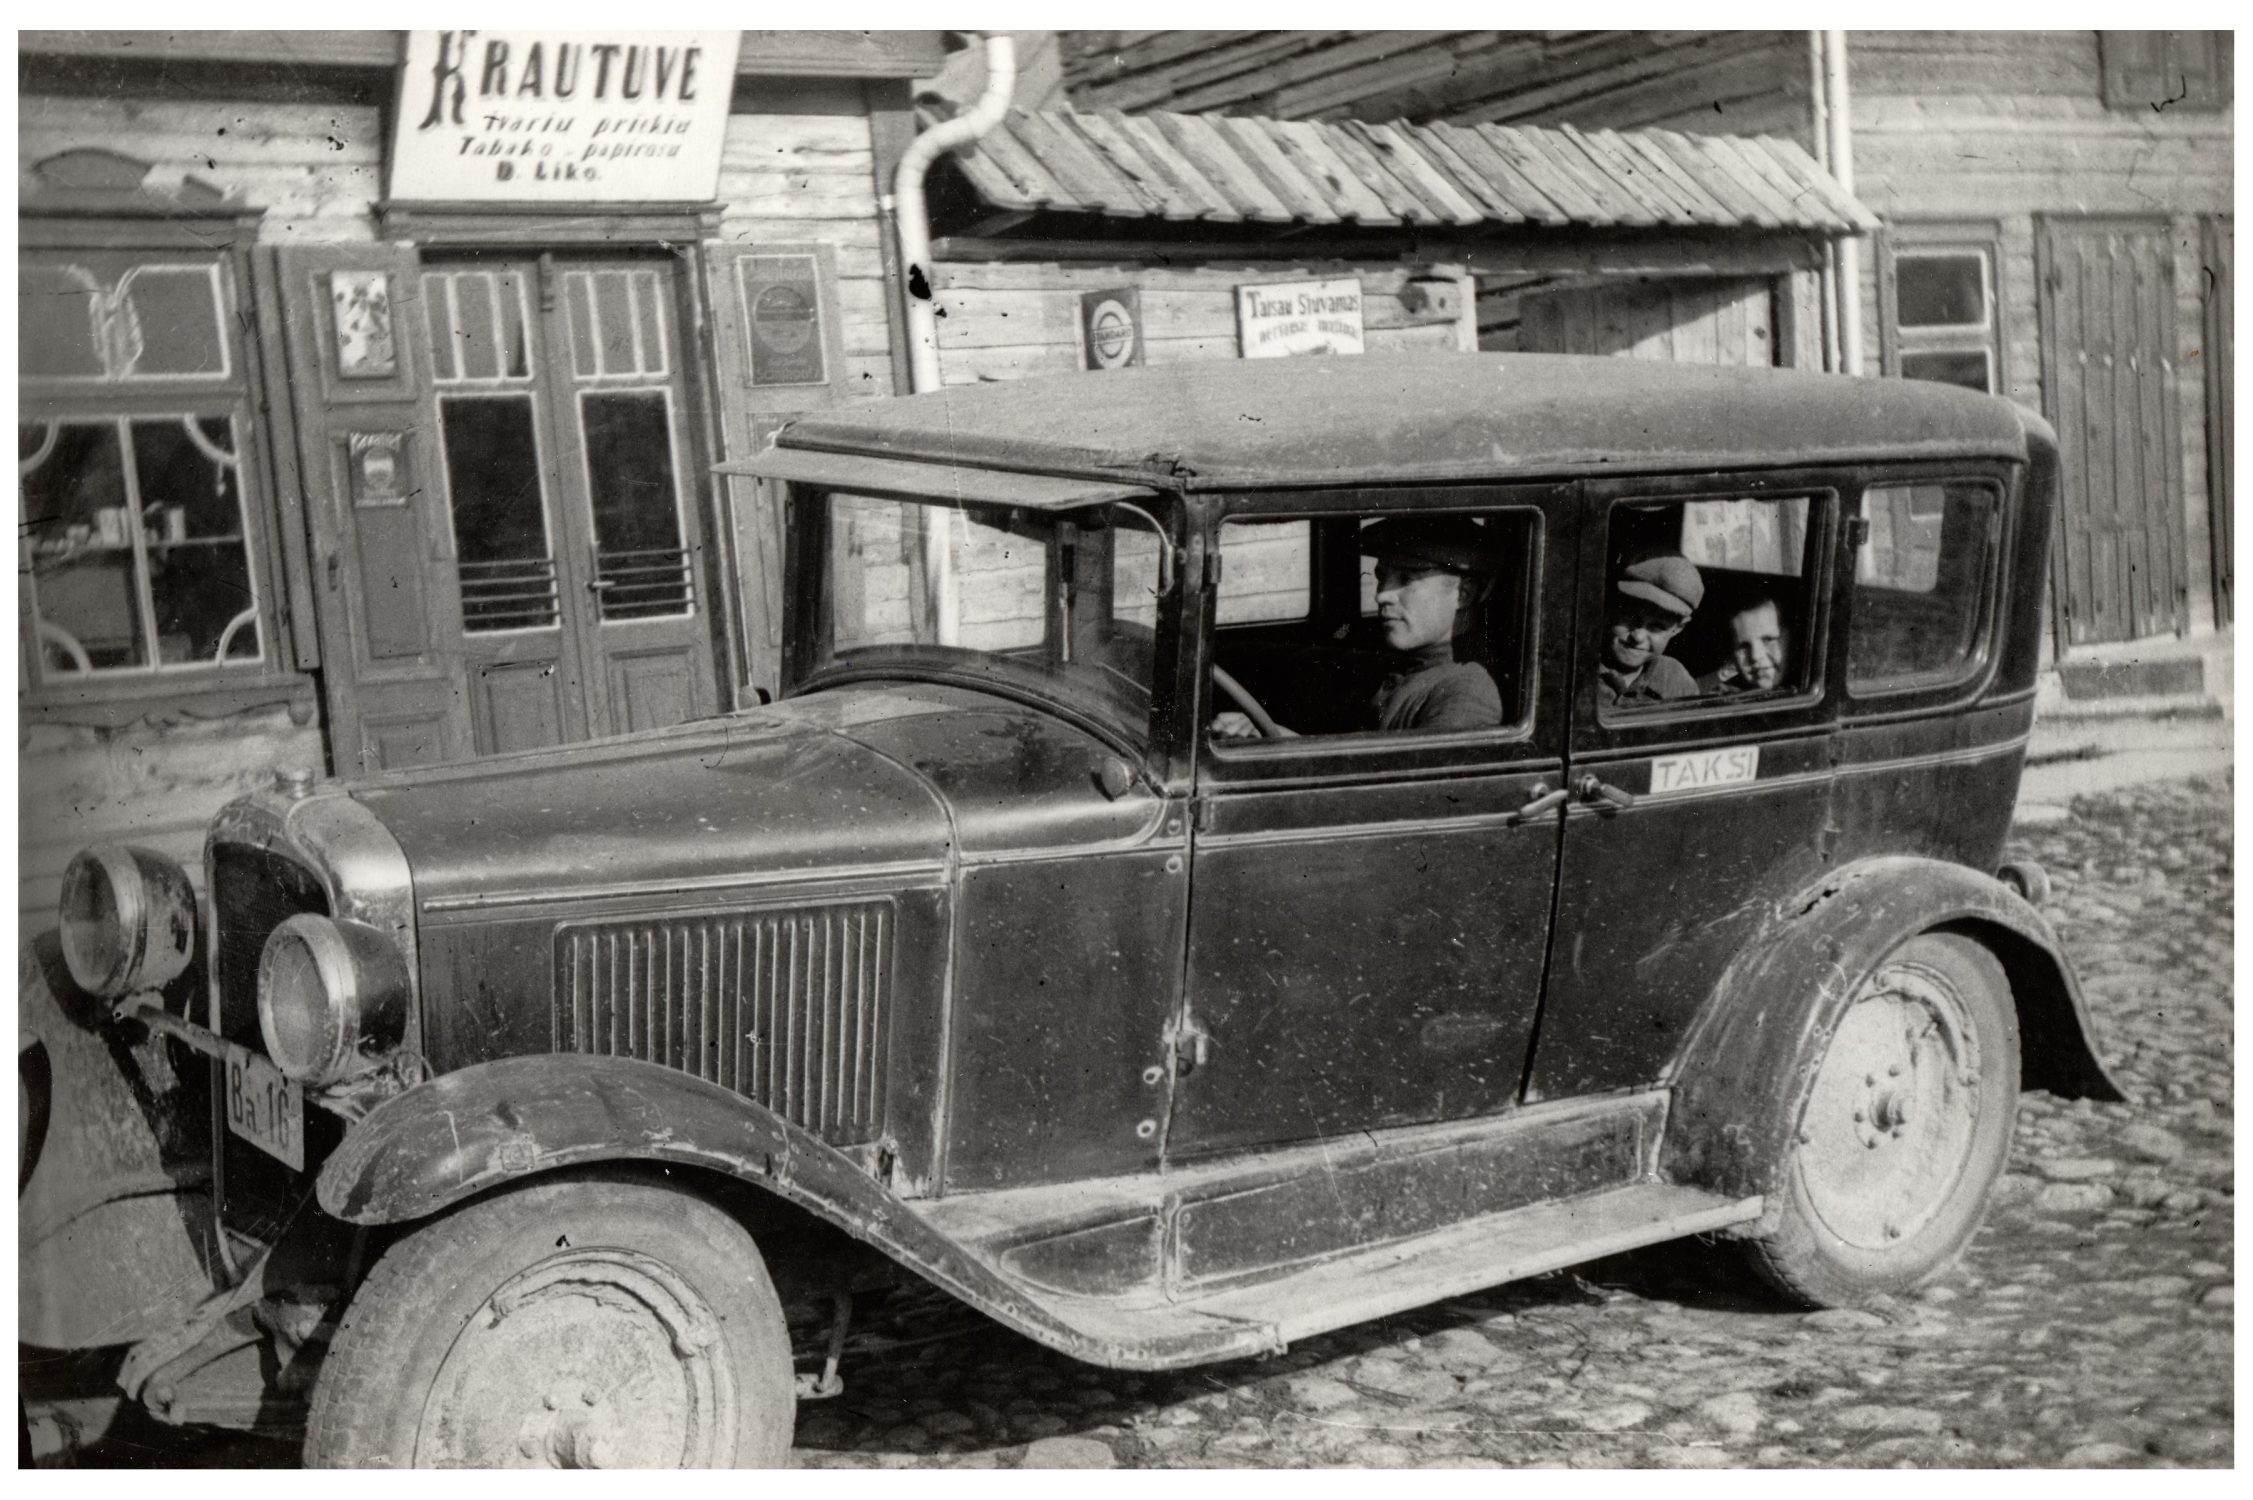 R. Žičkaus kolekcija - Biržų Taksi automobilis1928 Chevrolet. Fotografas - Juozas Daubaras